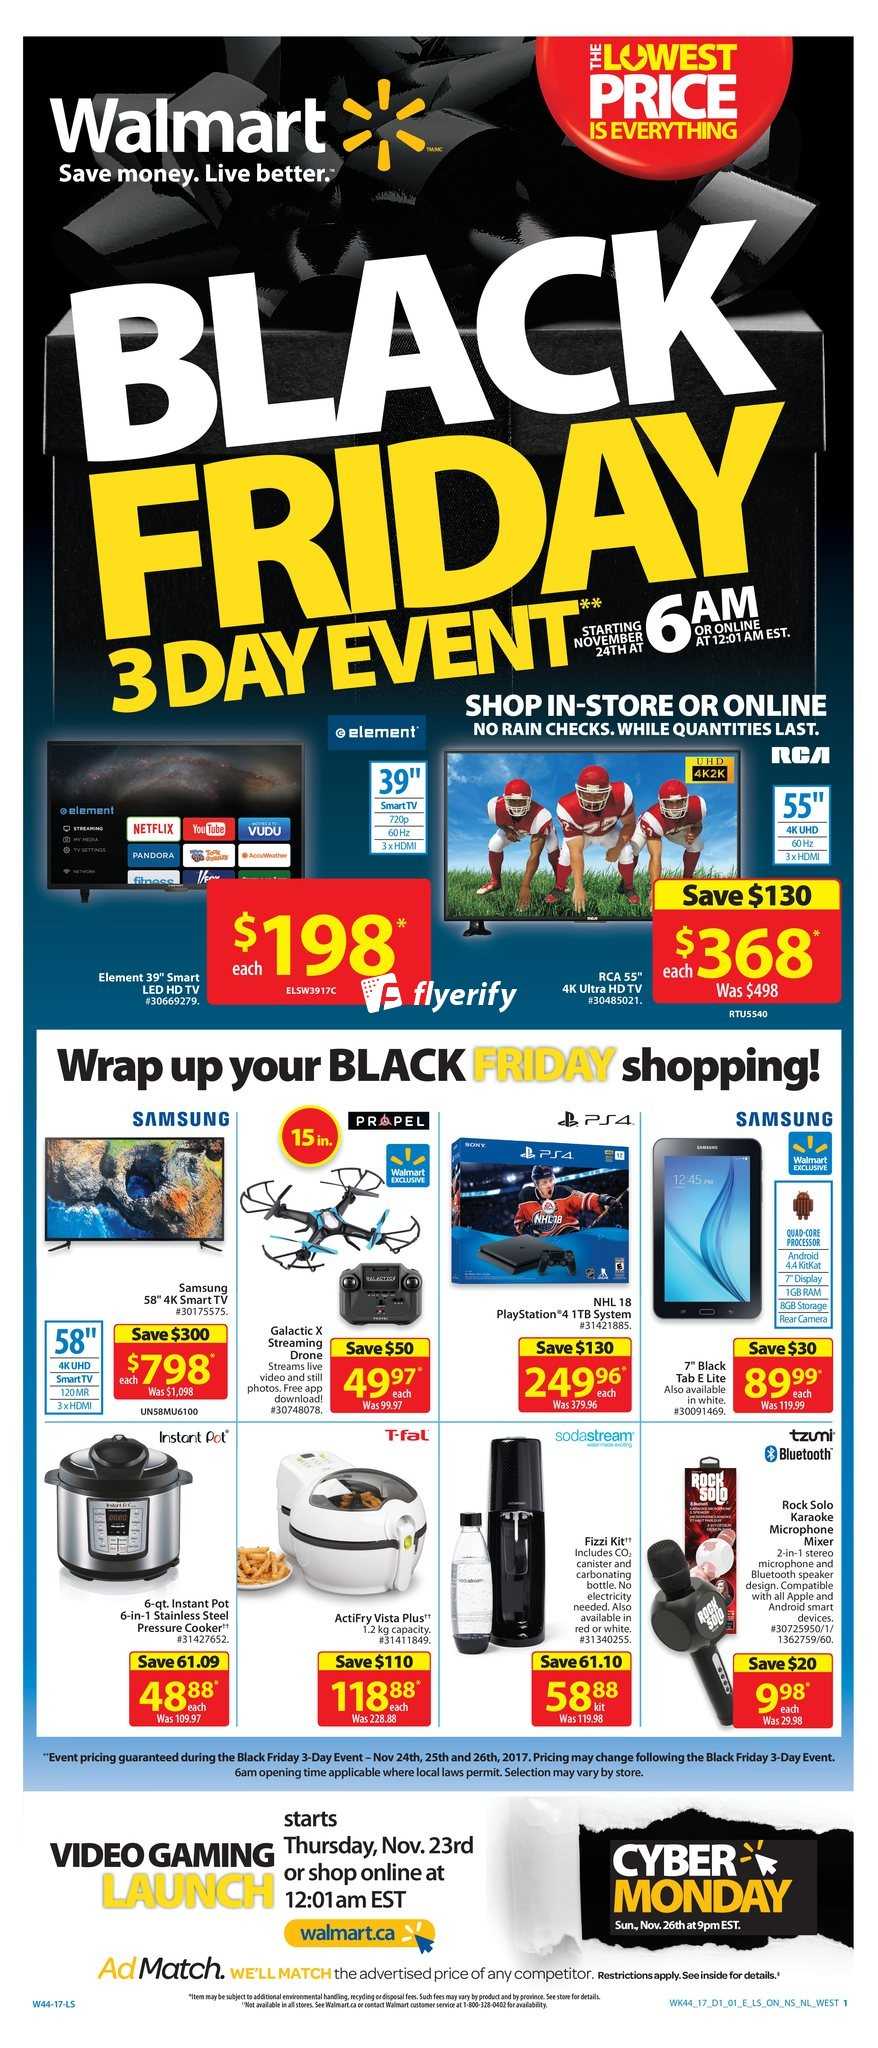 Walmart Canada Black Friday 3-Day Event Flyer November 24 to 26, 2017 Canada